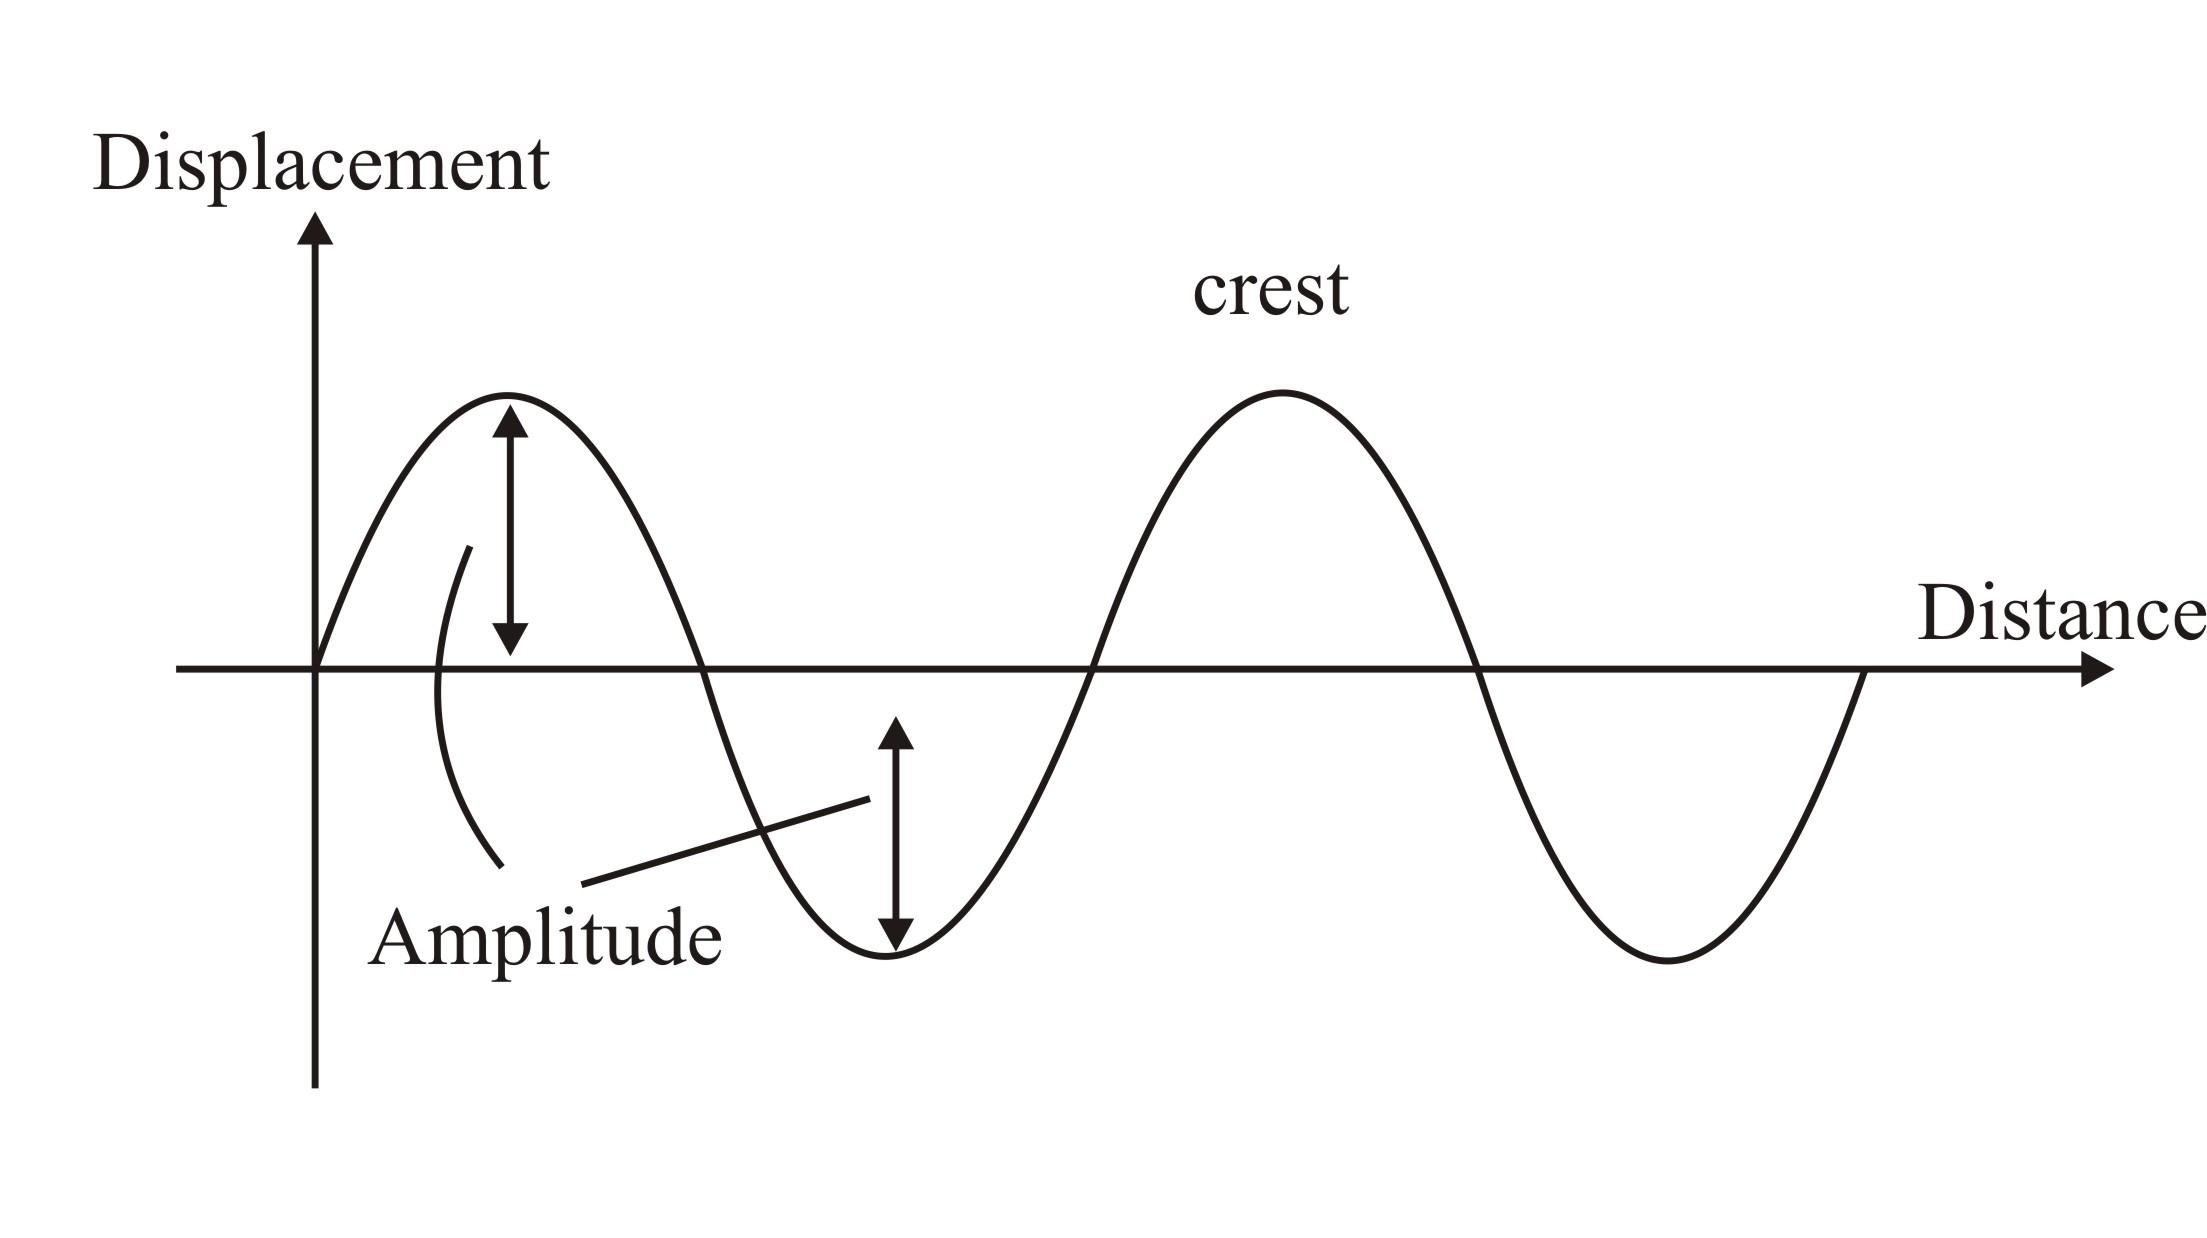 angivet interpersonel ungdomskriminalitet Define the amplitude of a wave Show itgraphically What does the amplitude  of a wave describe